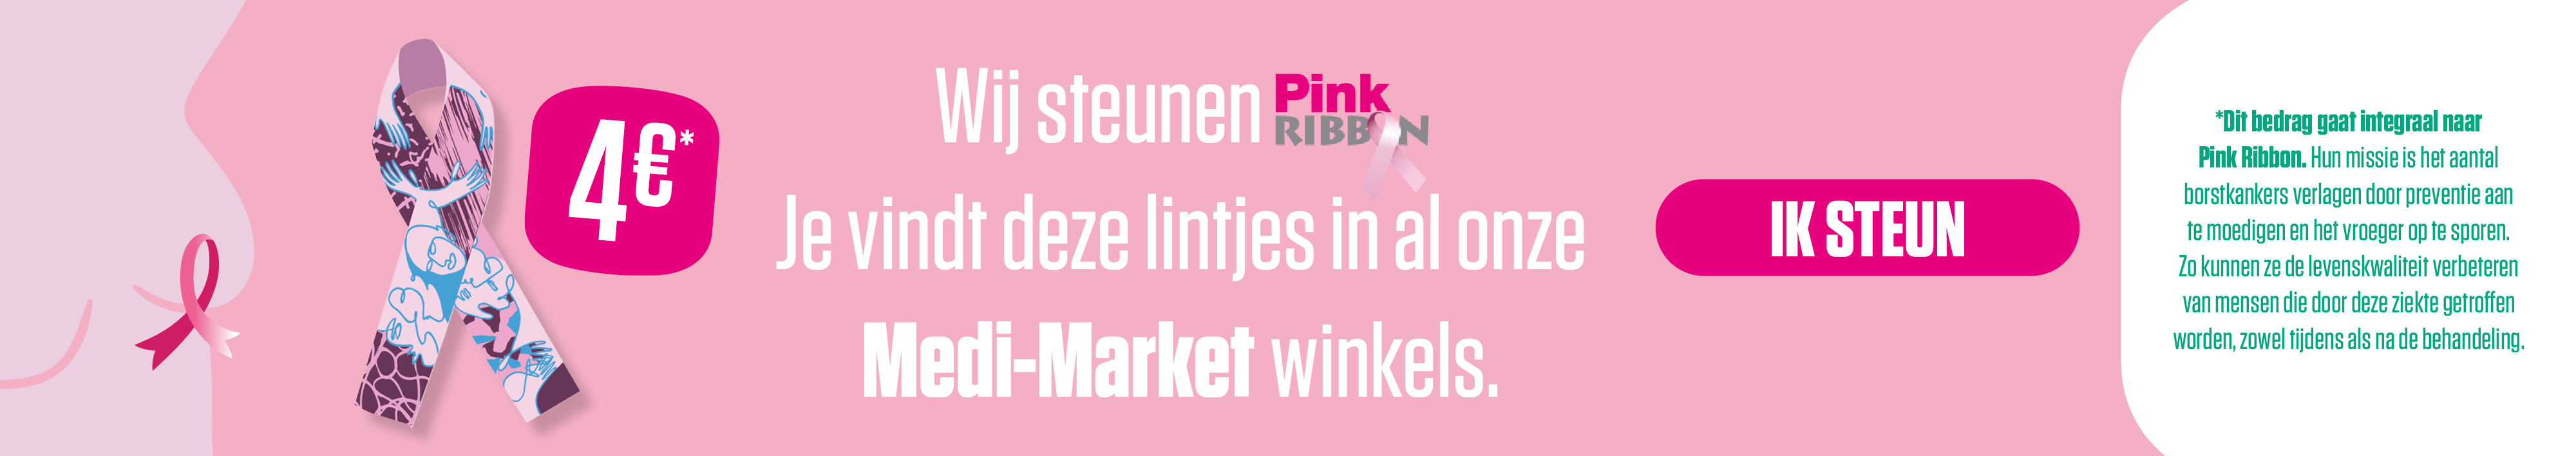 Banner_Pink Ribbon_MM_NL_385x613.jpg